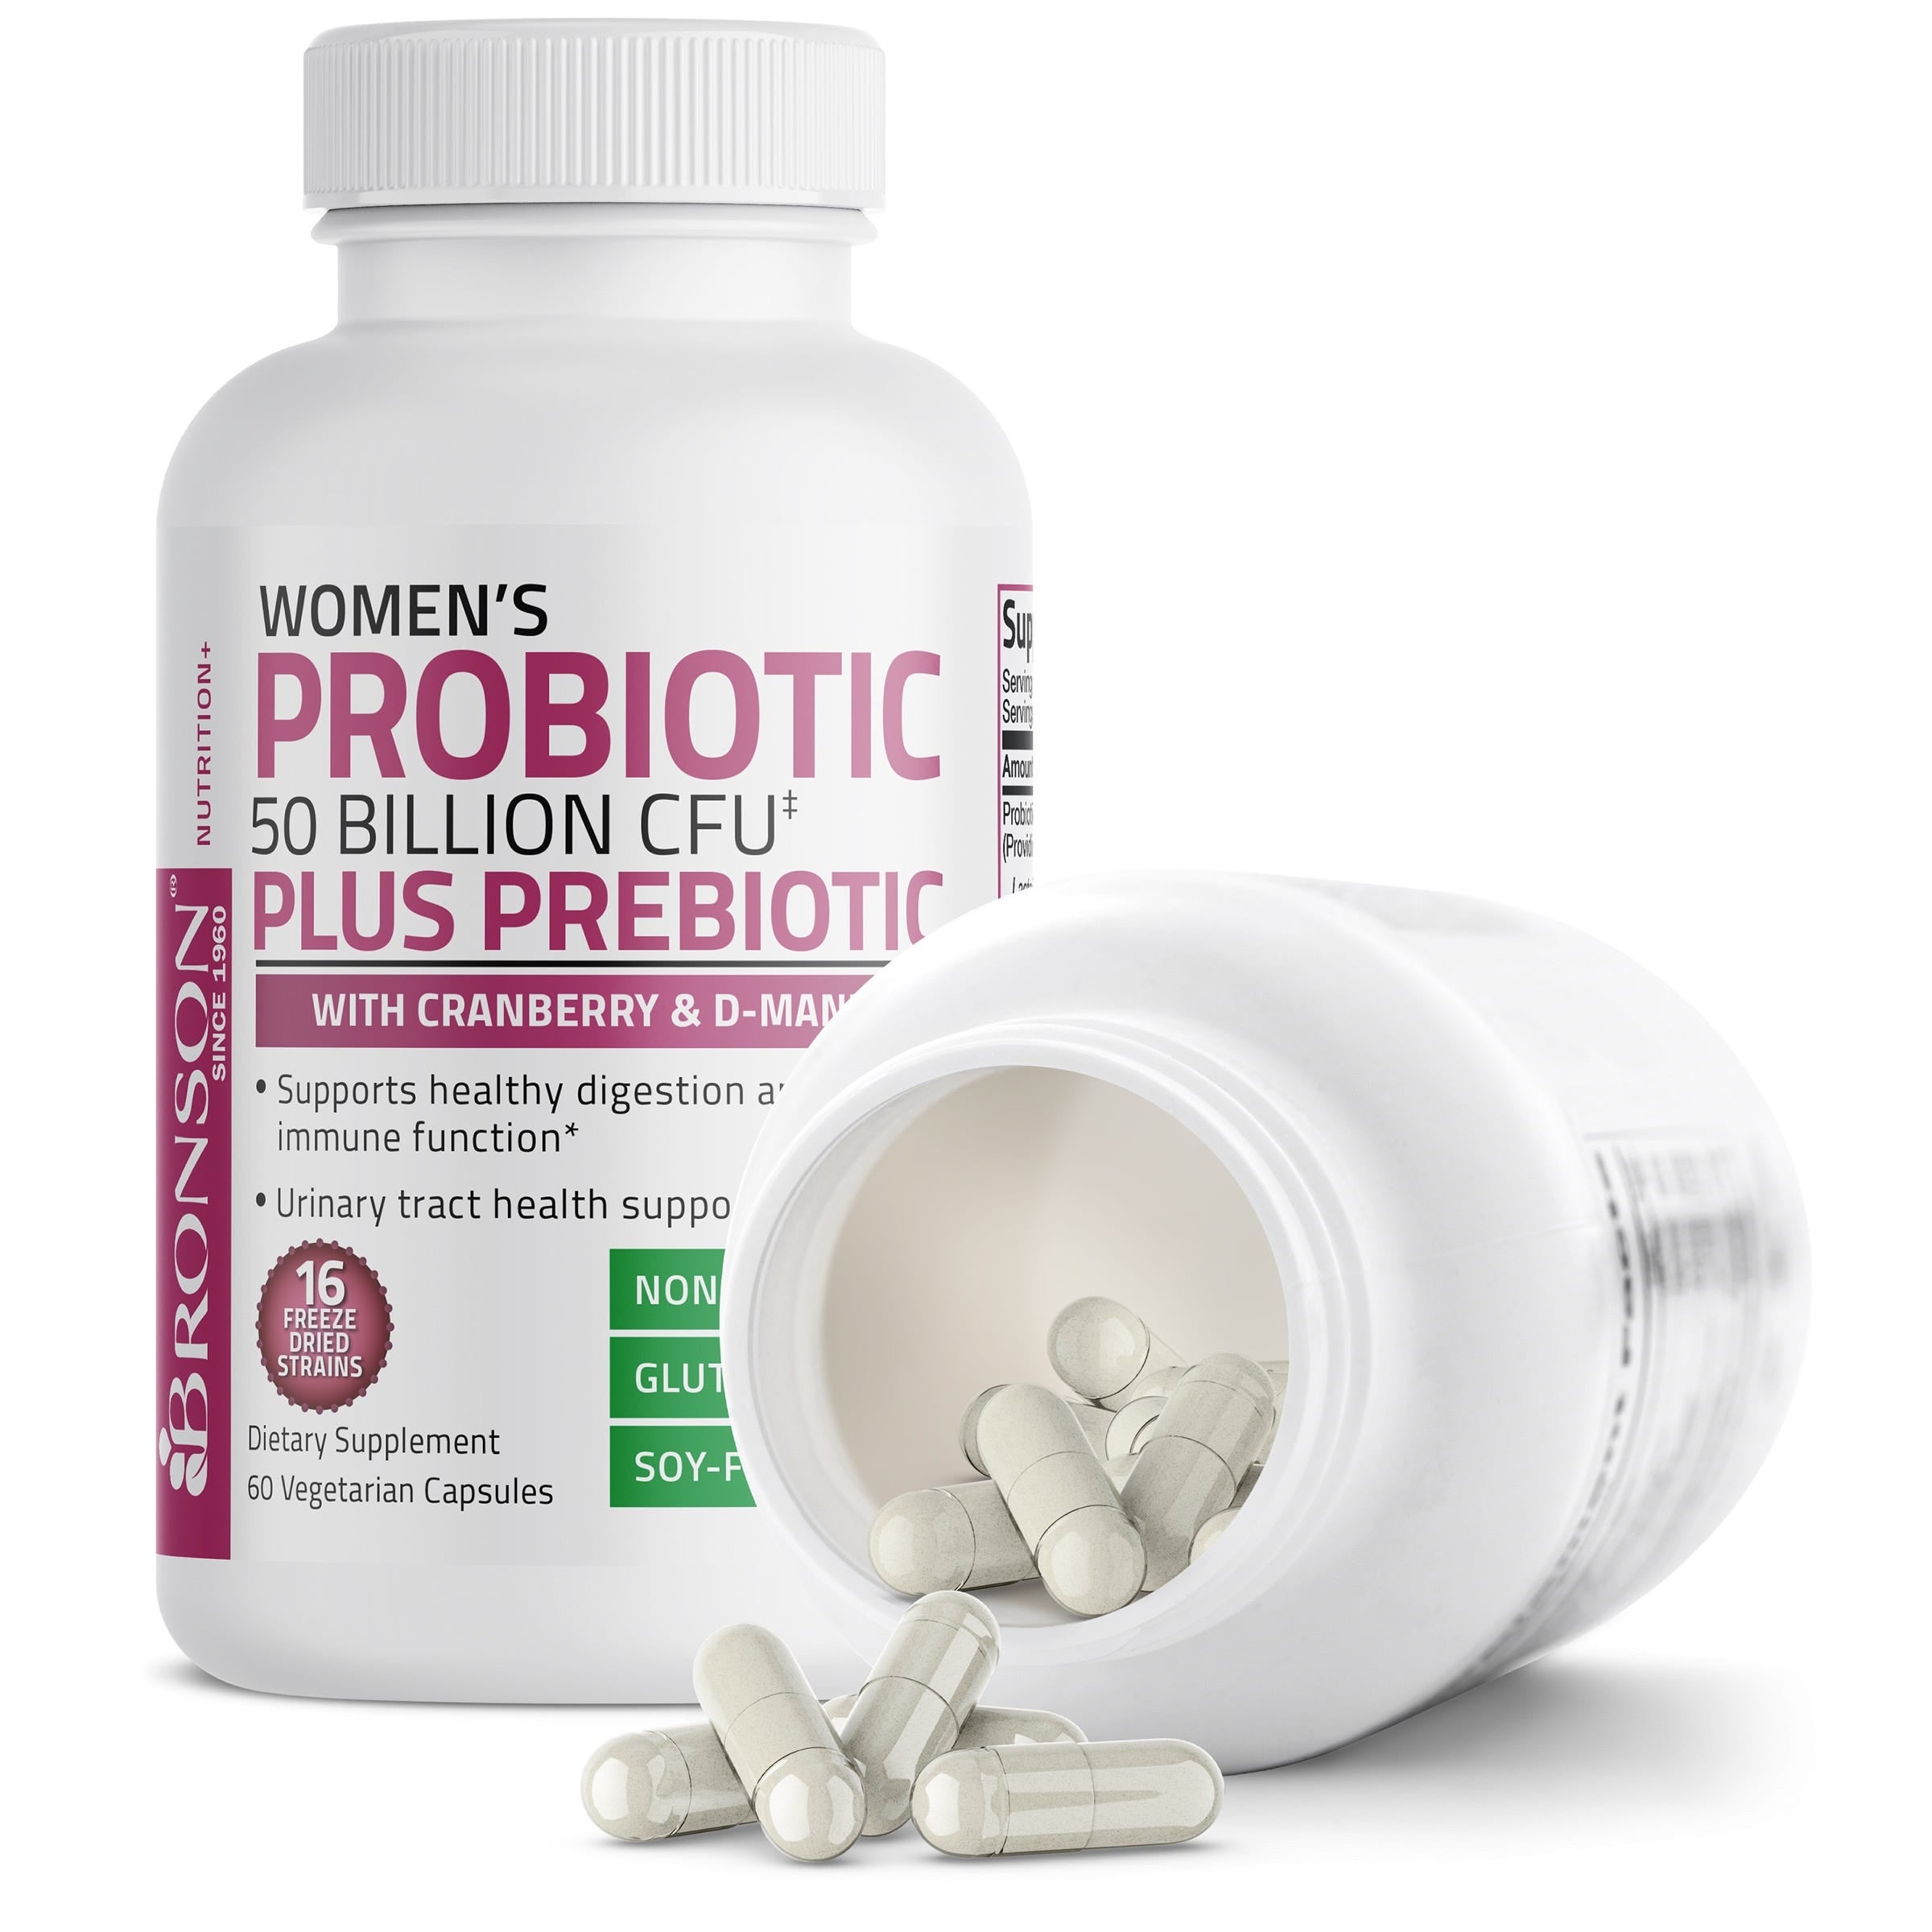 Probiotic Plus Prebiotic For Women - 50 Billion CFU - 60 Vegetarian Capsules view 5 of 7